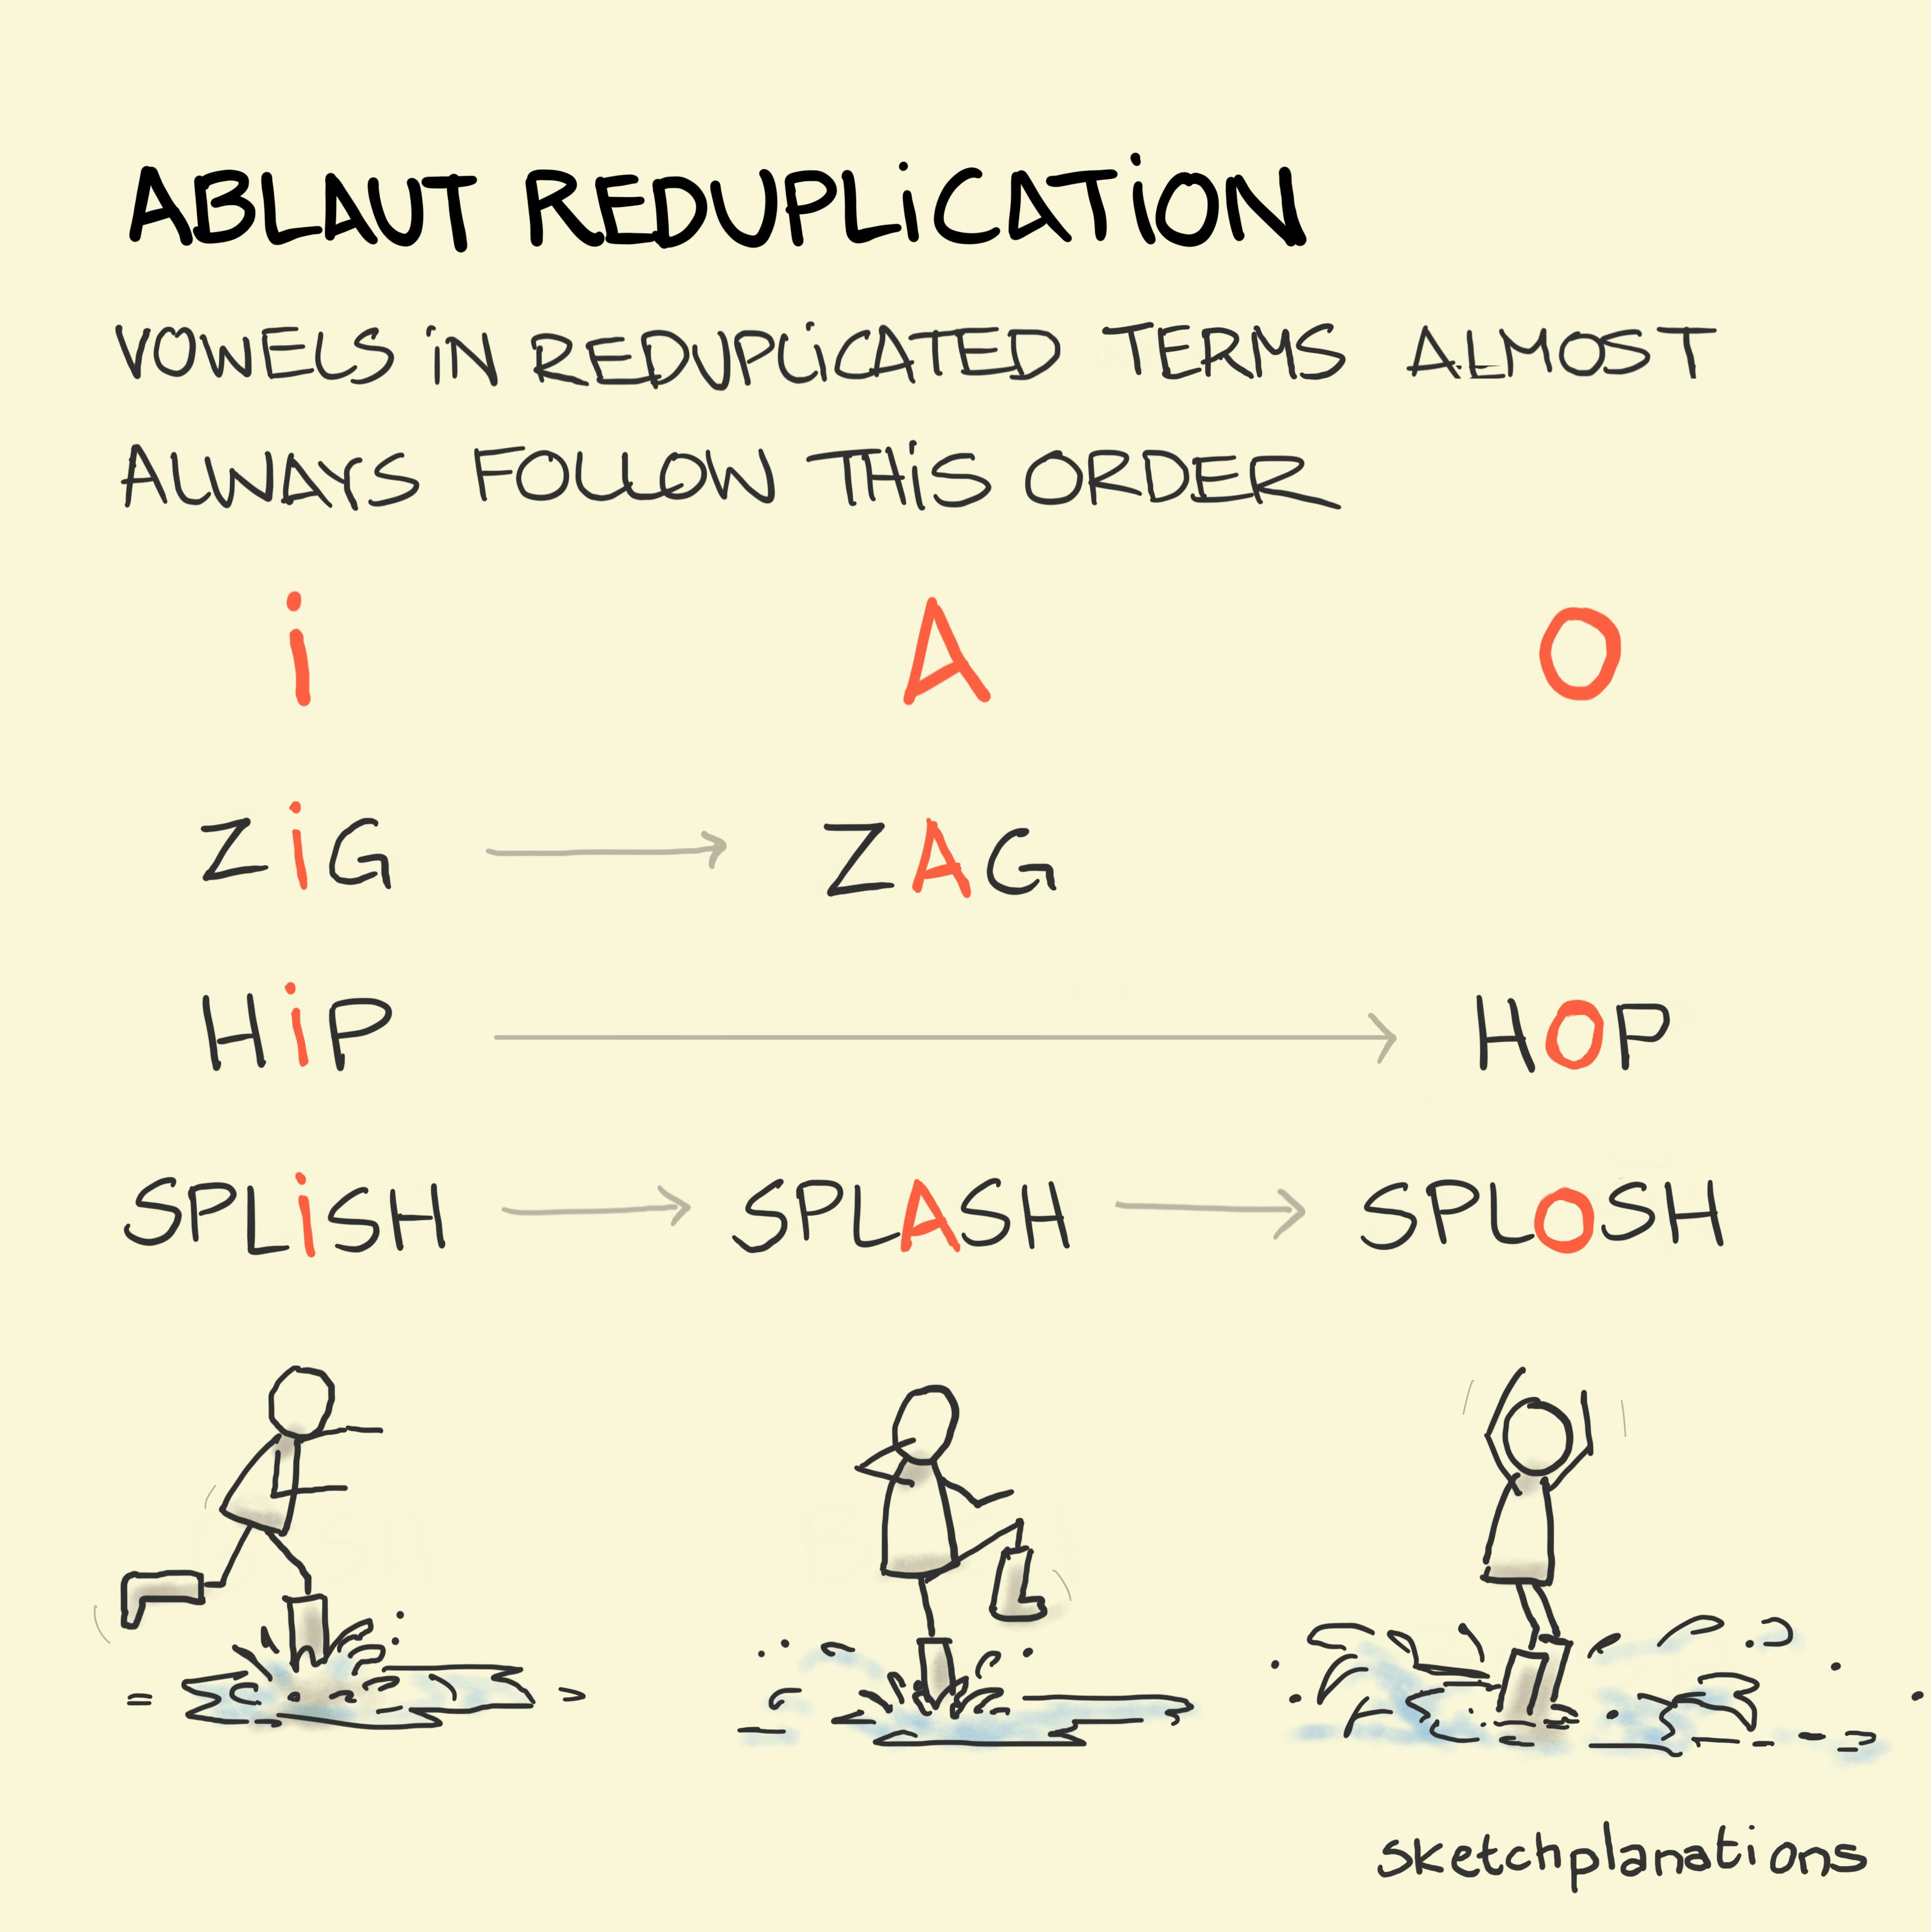 Ablaut reduplication - Sketchplanations